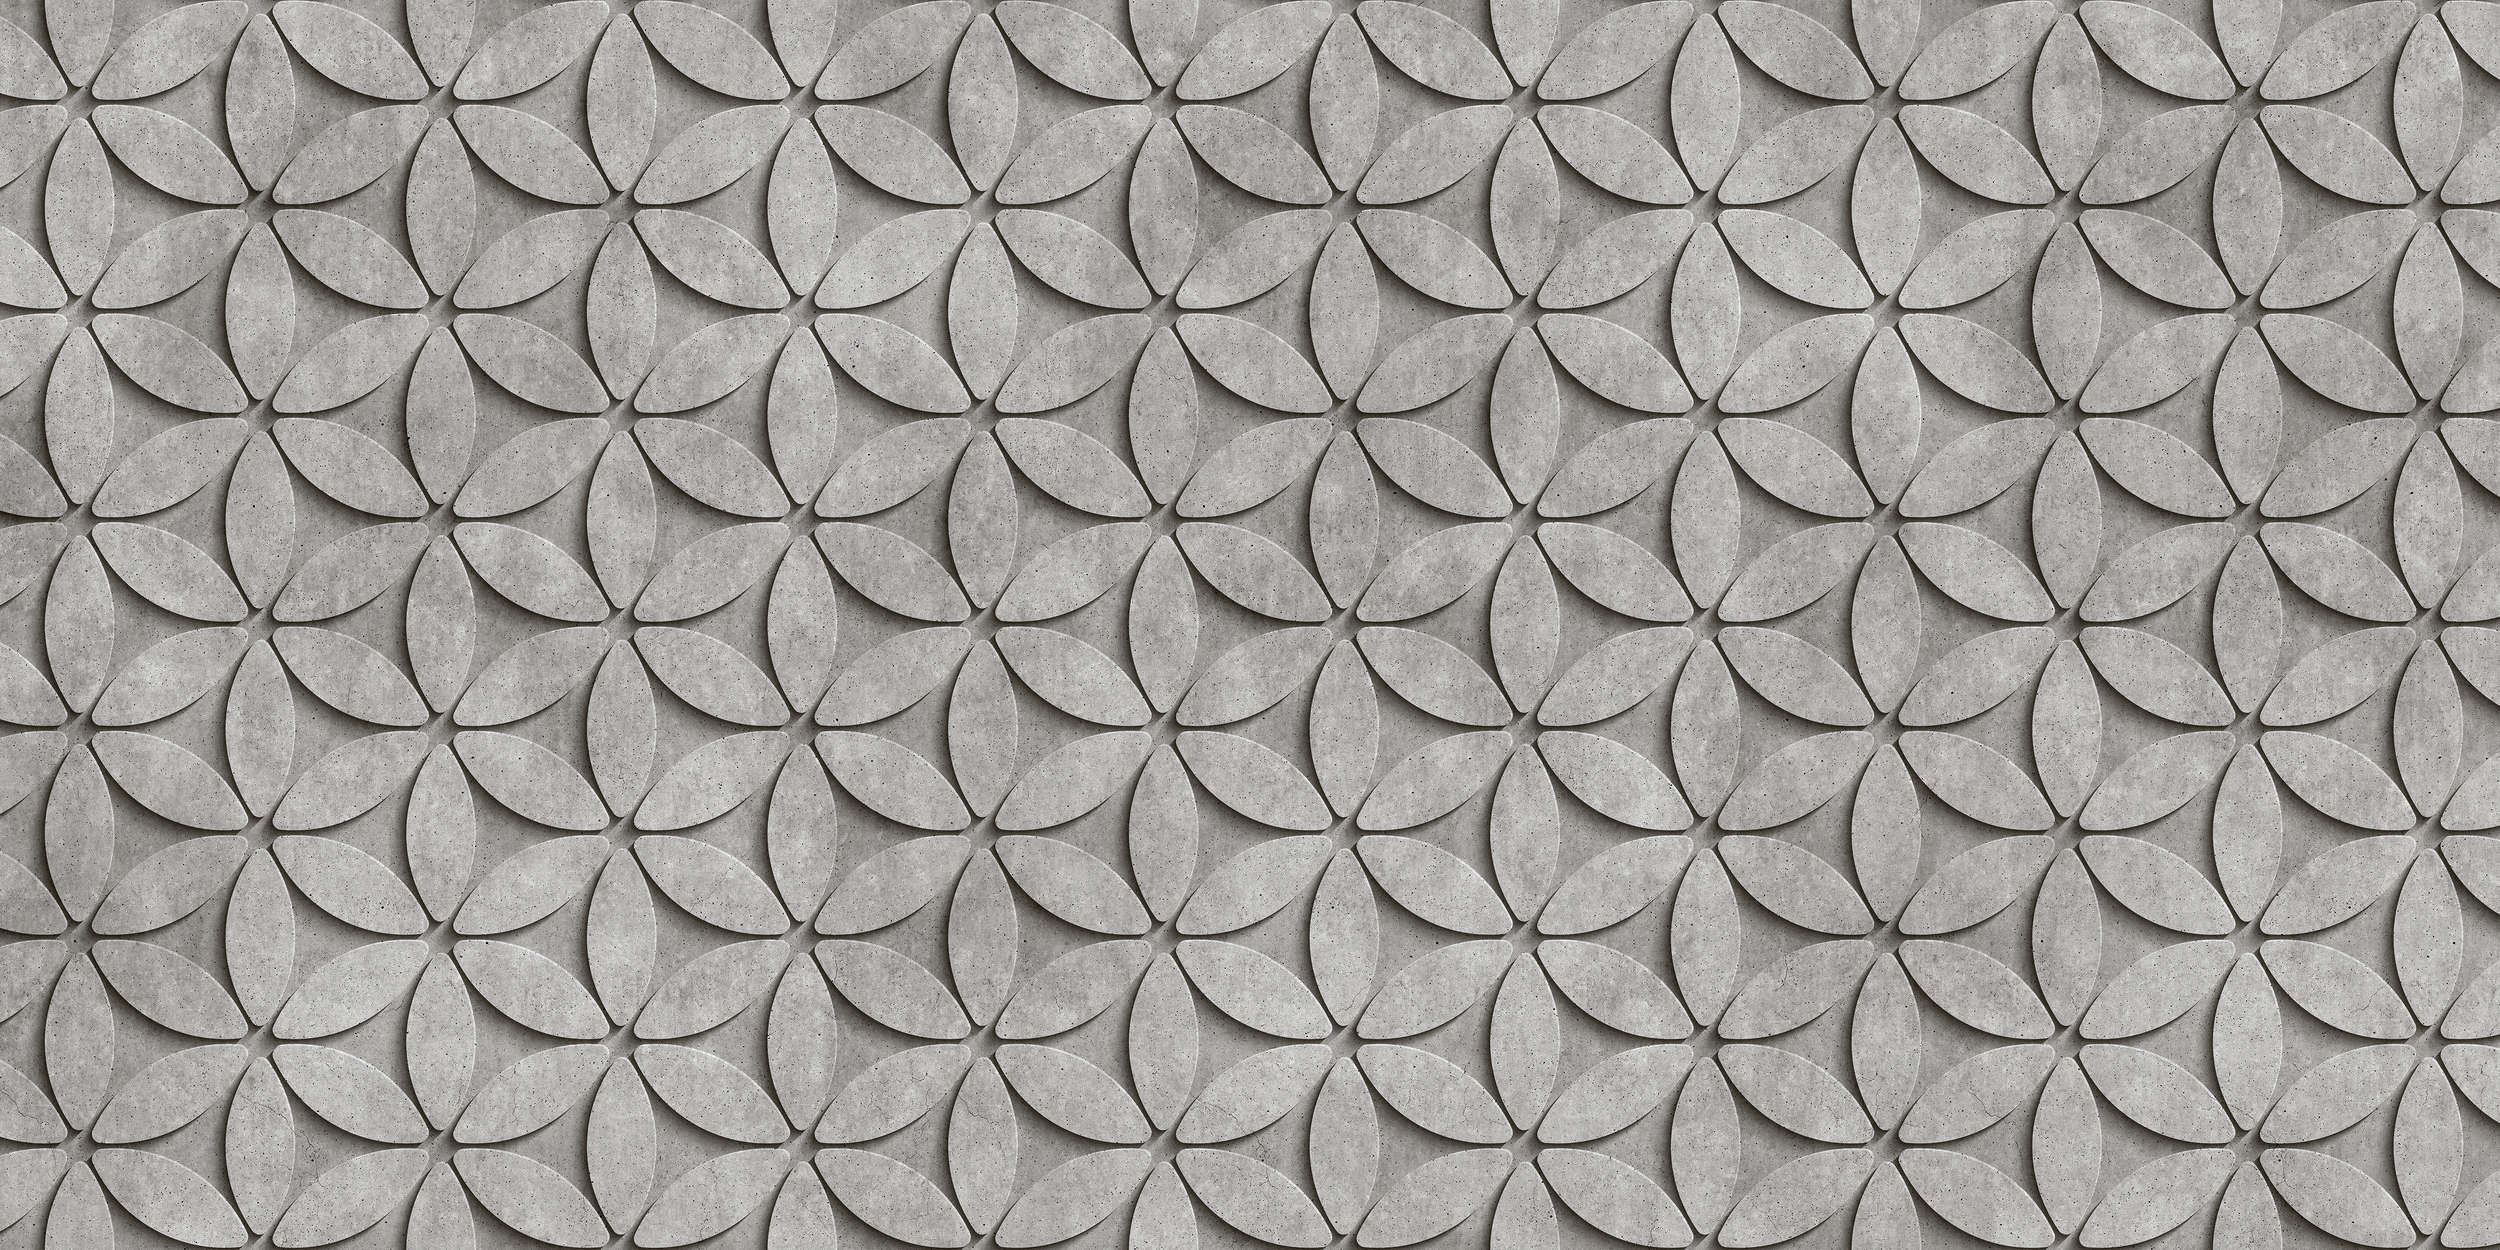             Tile 1 - Fototapete in Cooler 3D Beton-Polygone – Grau, Schwarz | Struktur Vlies
        